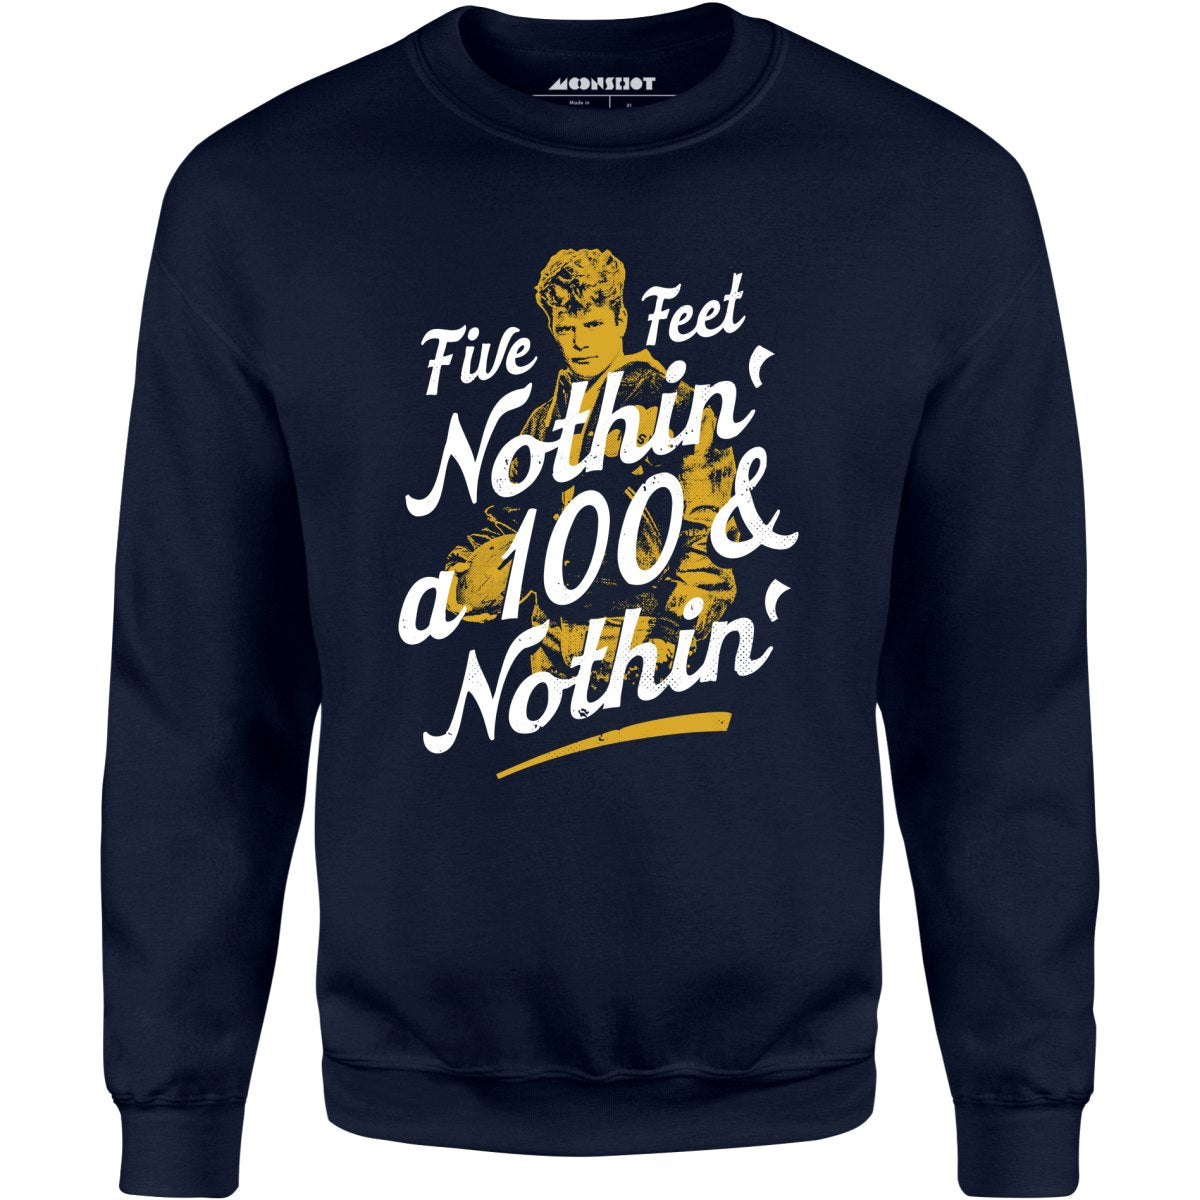 Rudy - Five Feet Nothin' a 100 & Nothin' - Unisex Sweatshirt